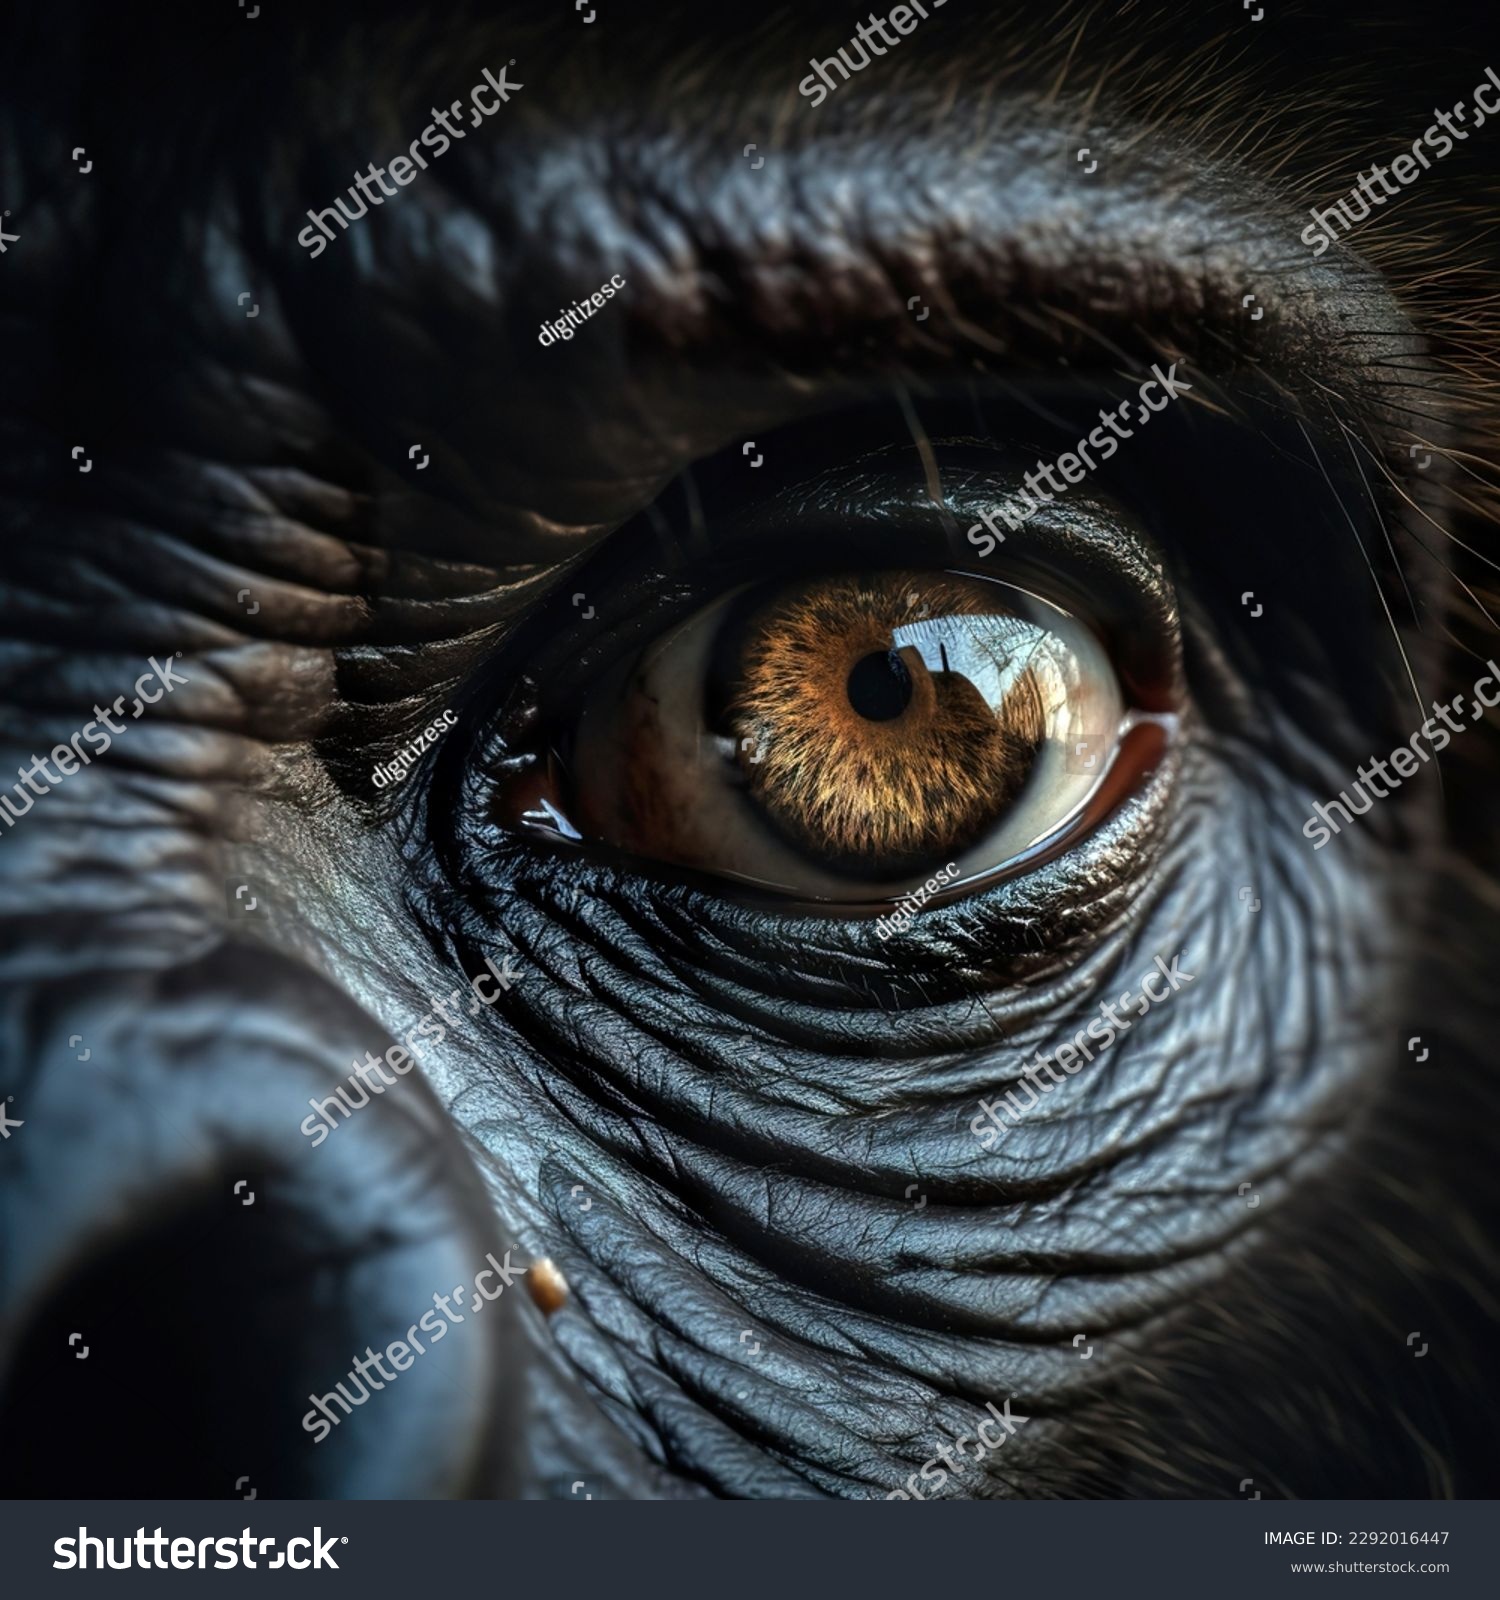 Portrait of an eye gorilla close-up #2292016447